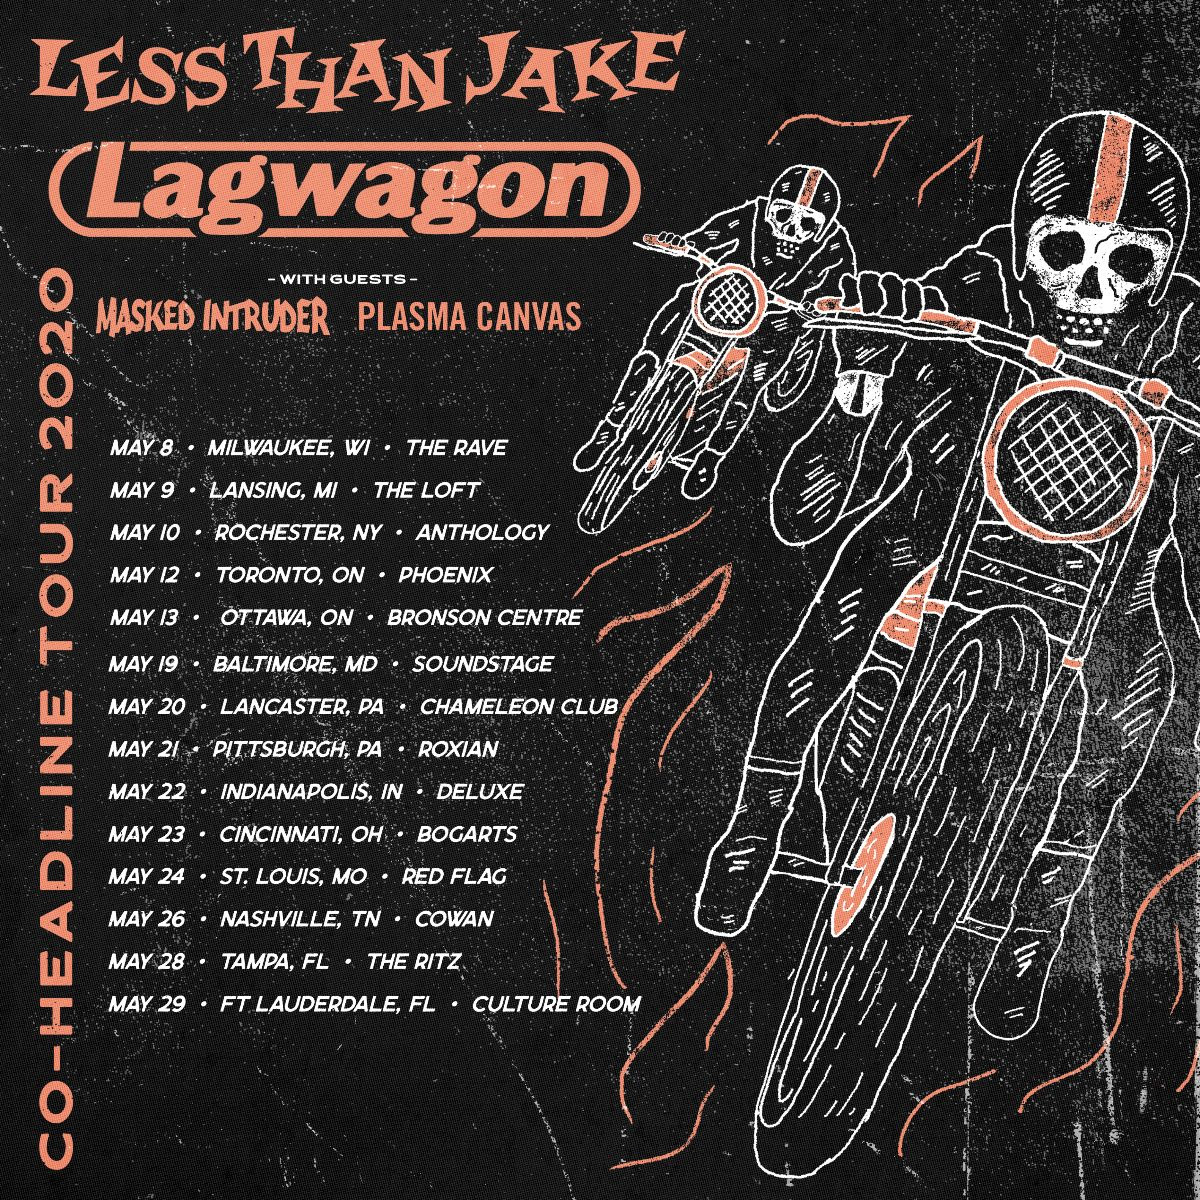 LESS THAN JAKE and LAGWAGON tour